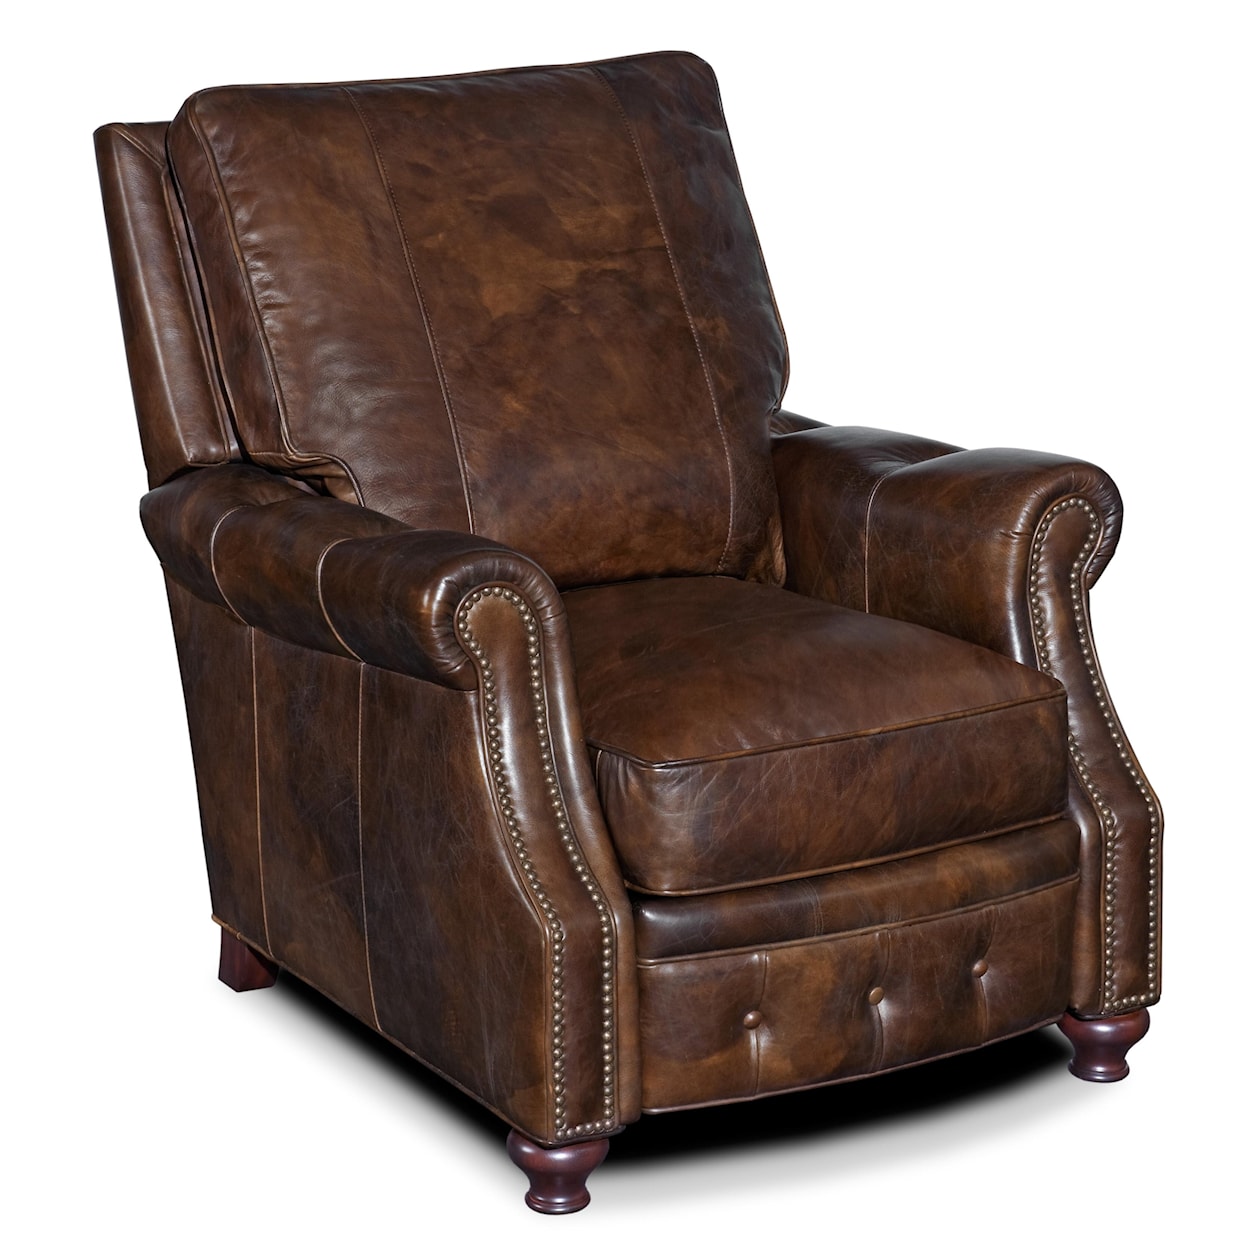 Hooker Furniture Reclining Chairs Traditional High Leg Recliner